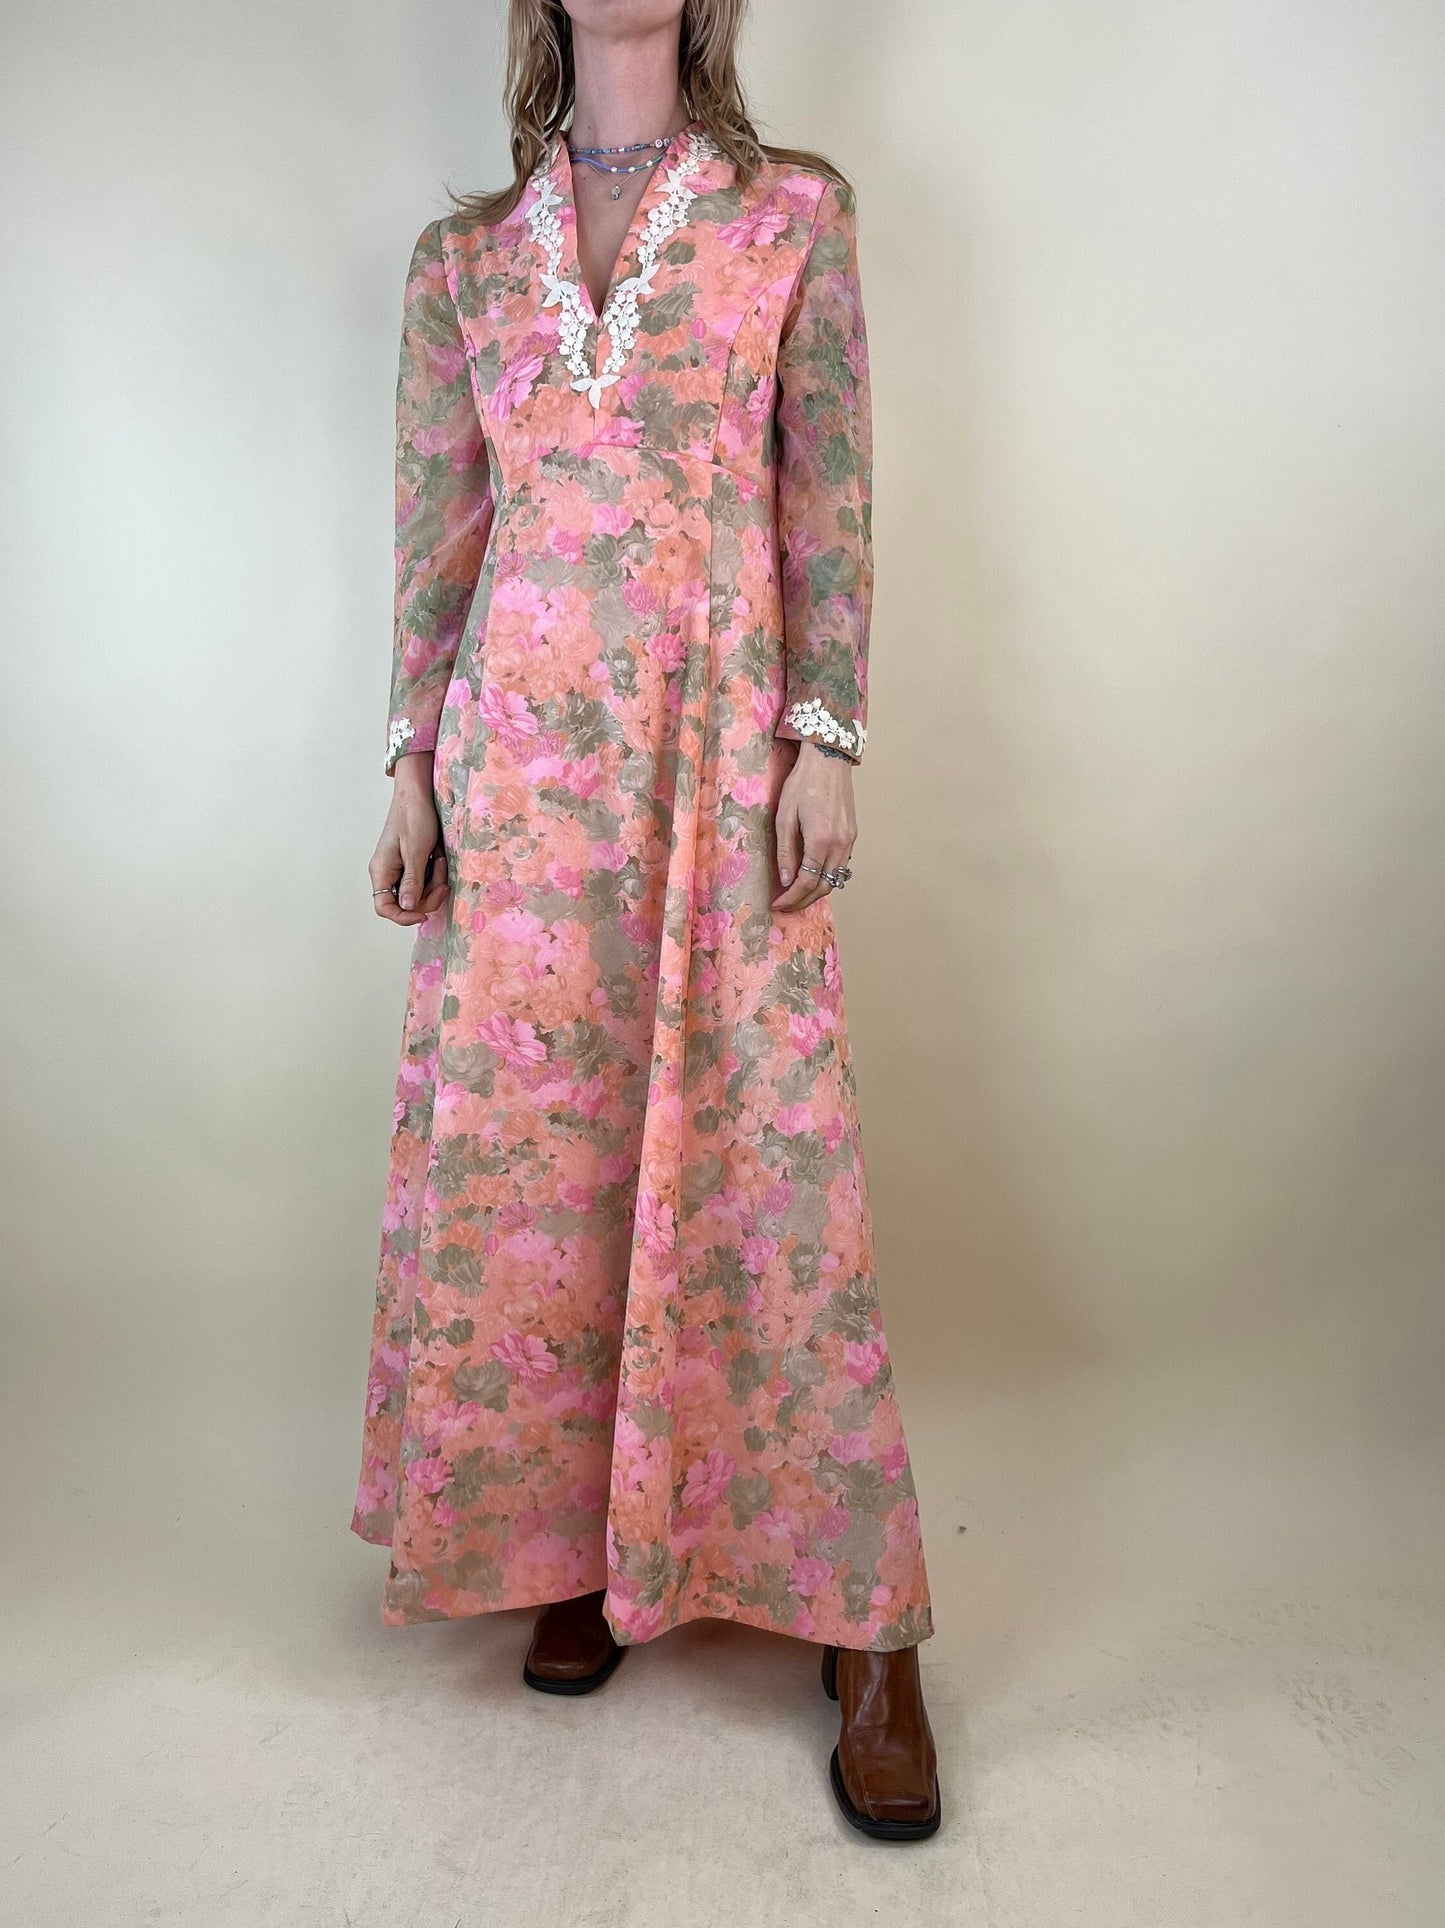 70s Floral Print Long Sleeve Hippie Dress / Vintage Kaftan / Small